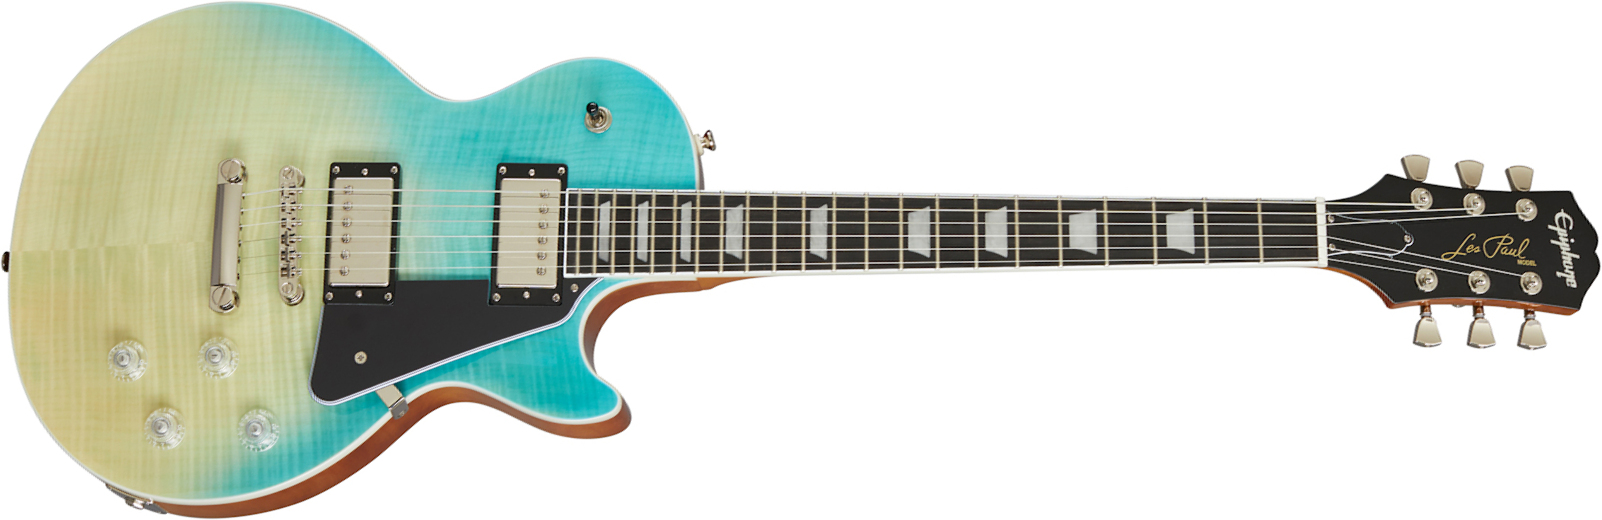 Epiphone Les Paul Modern Figured 2h Ht Eb - Caribbean Blue Fade - Single cut electric guitar - Main picture